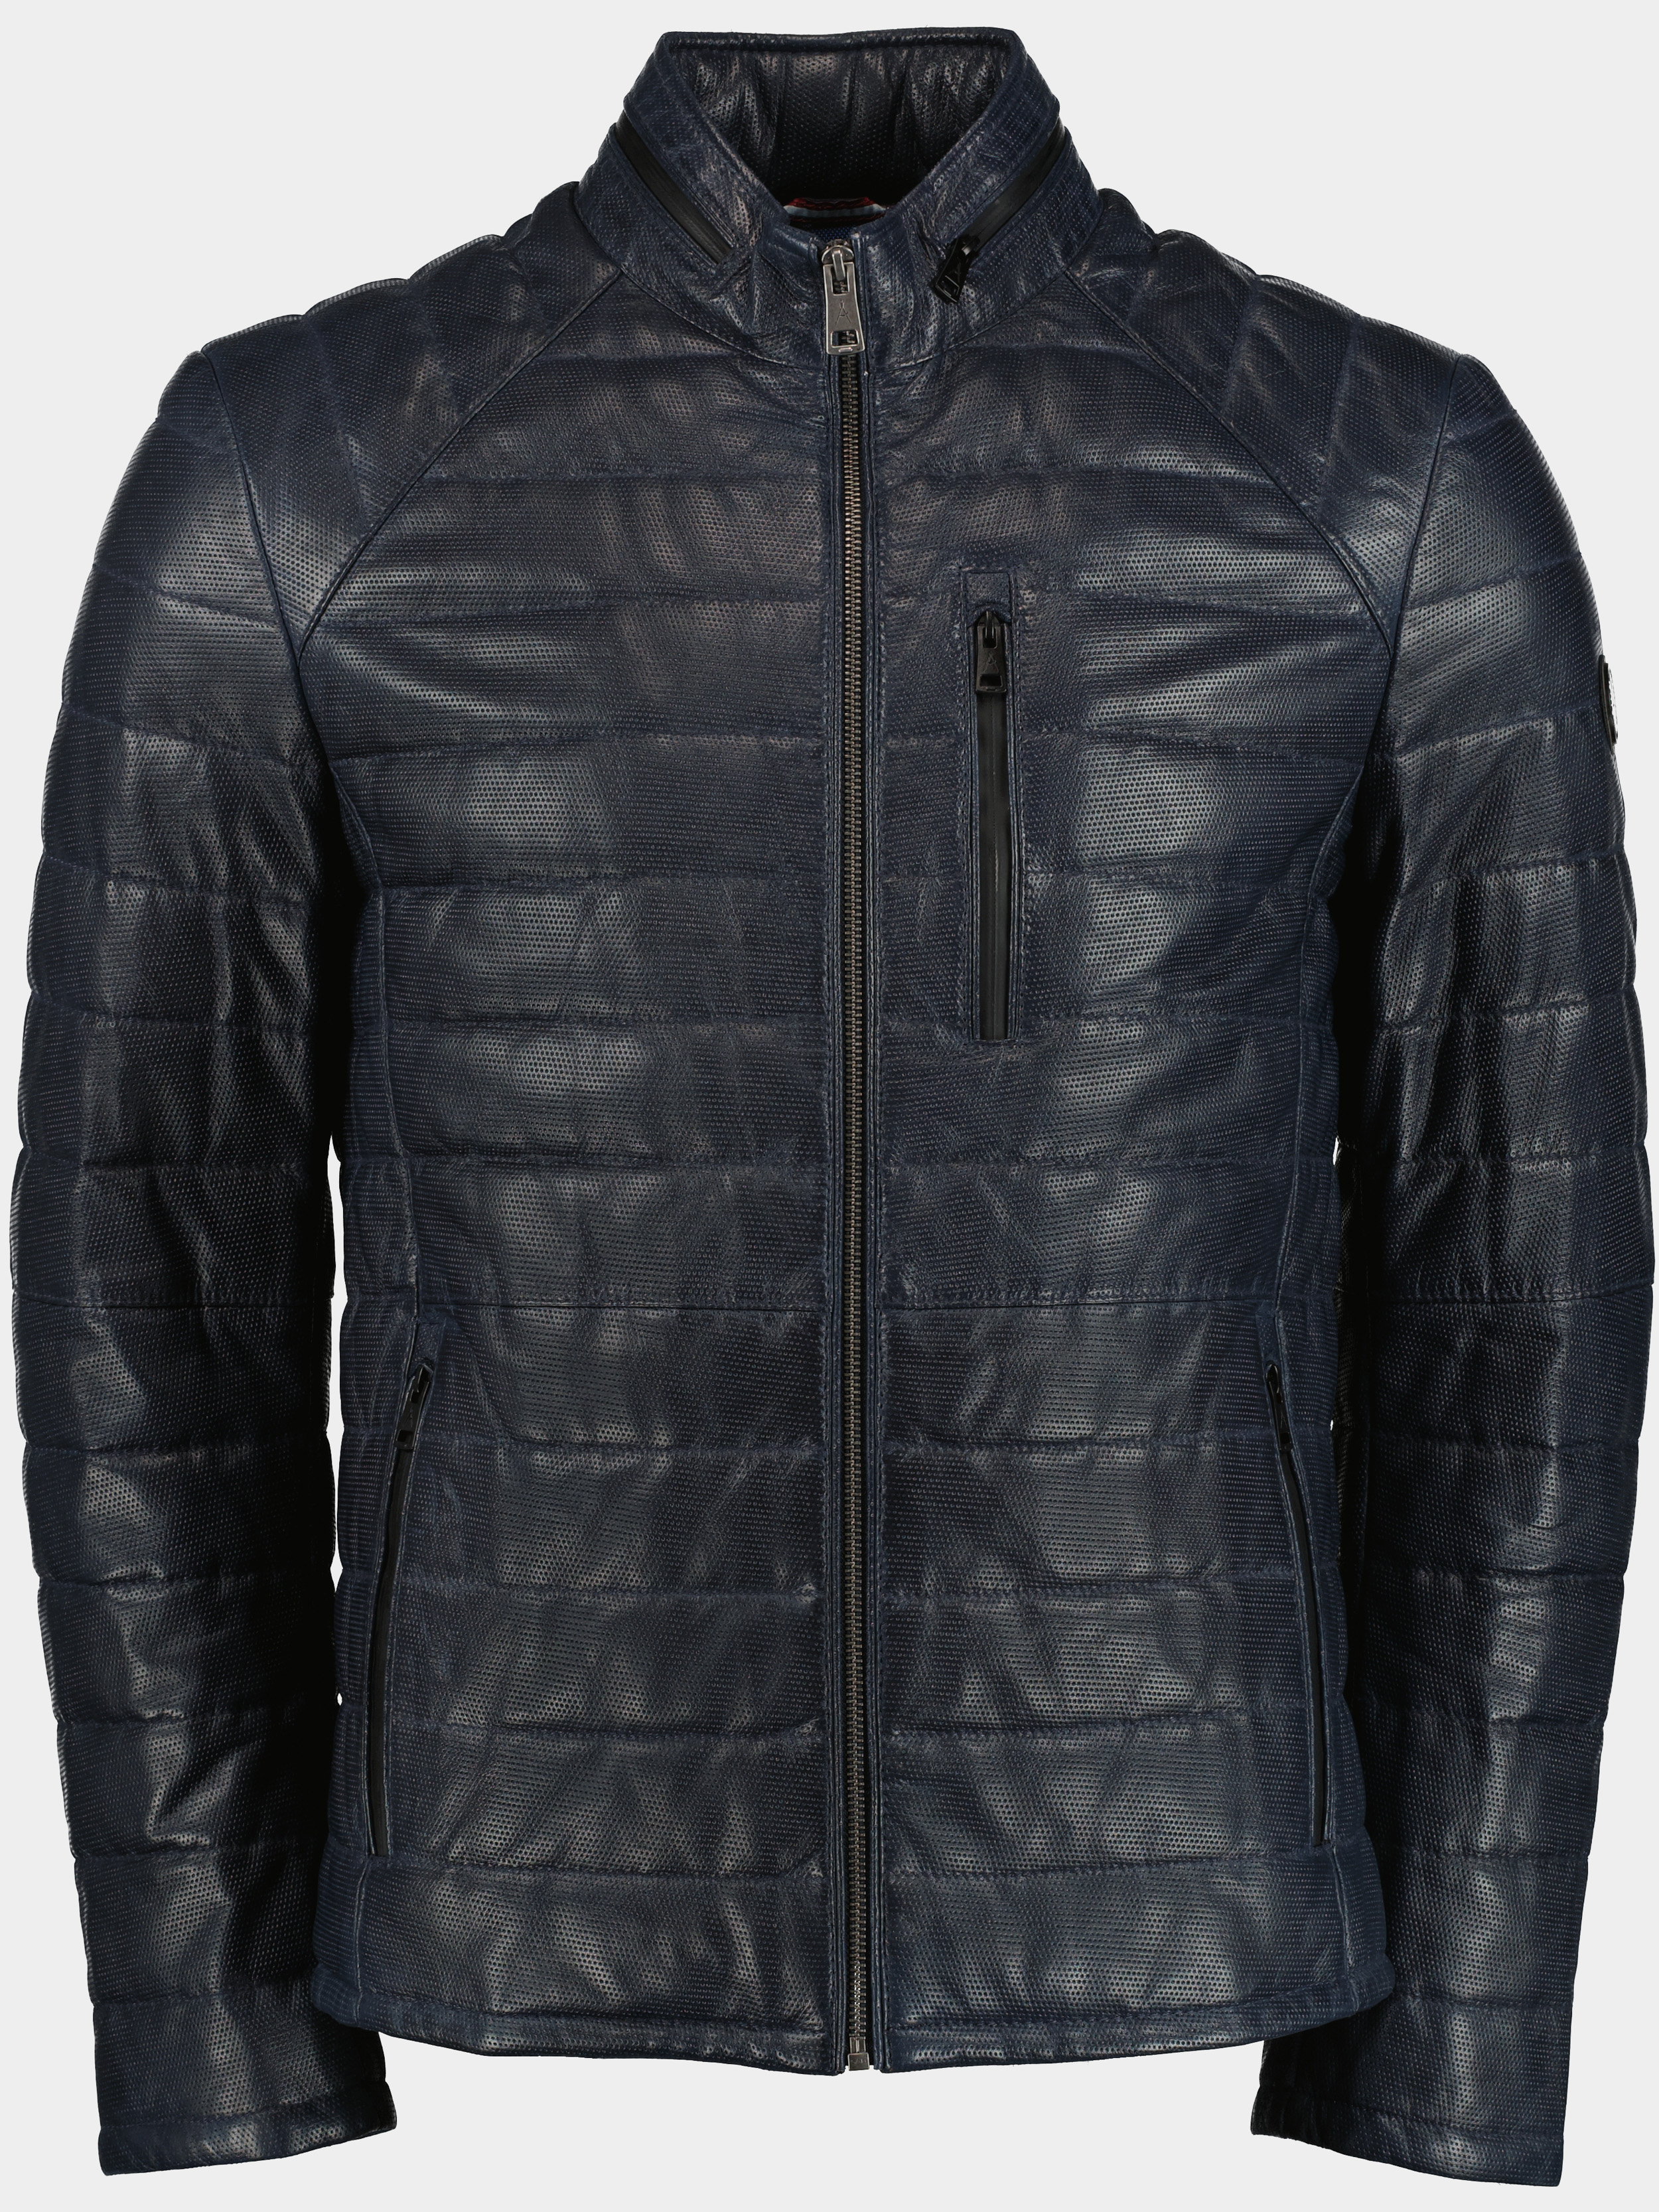 DNR Lederen jack Blauw Leather Jacket 52290/780